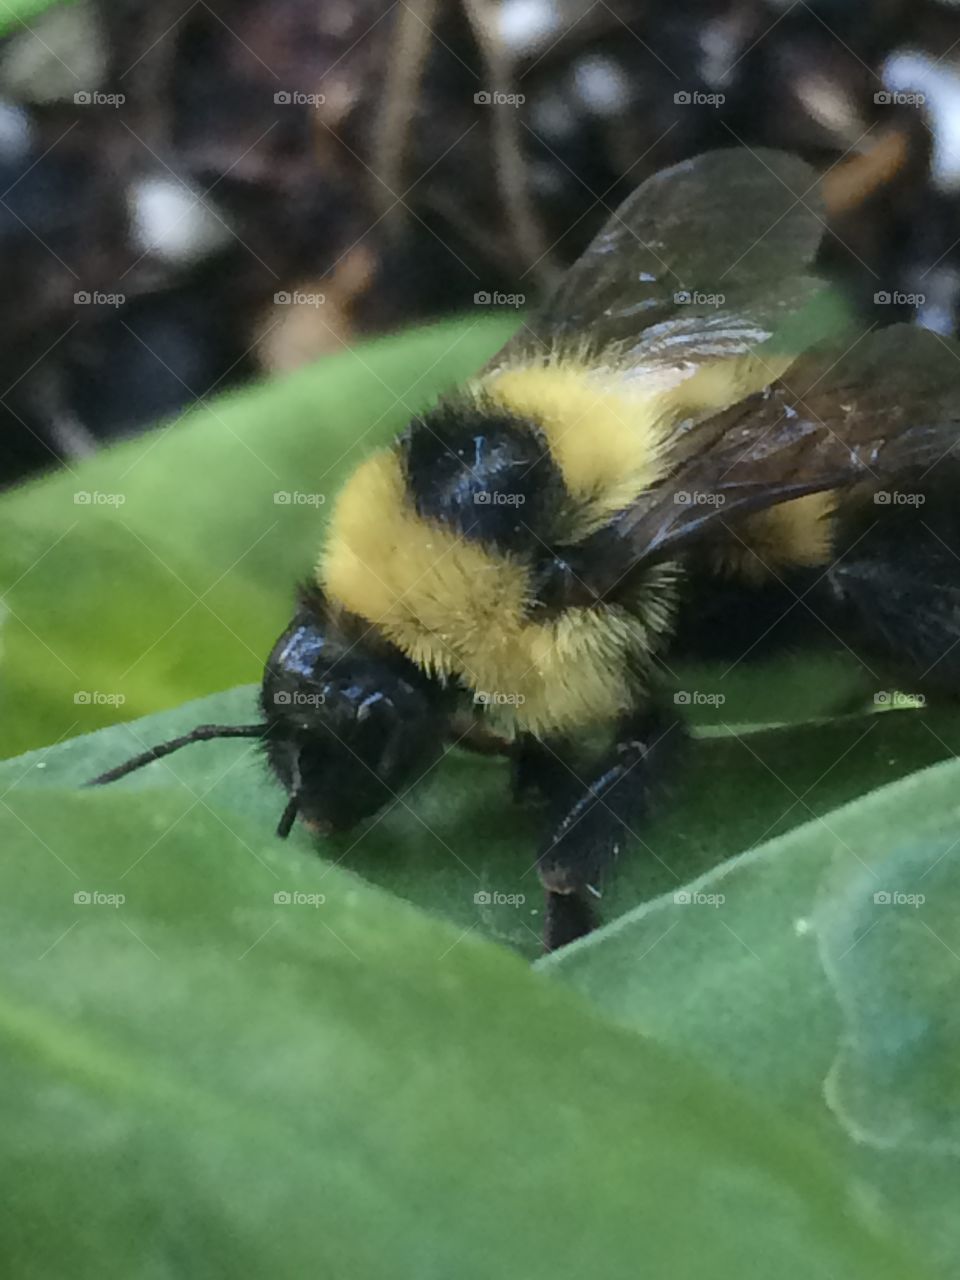 🐝 🐝 bees I love them 😍 
